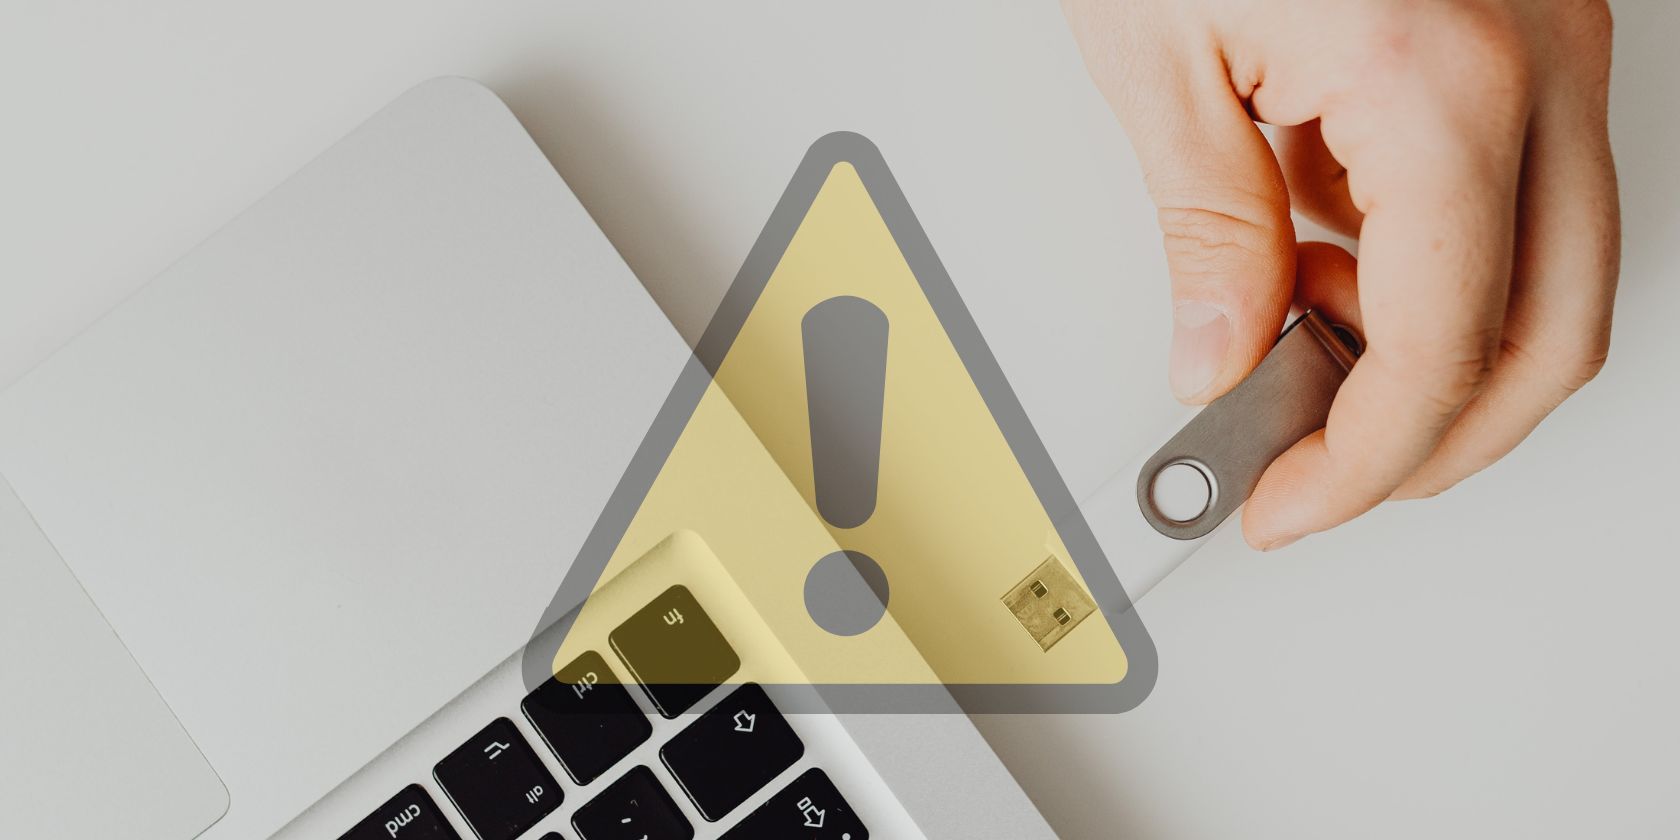 usb being inserted into laptop behind translucent alert logo 